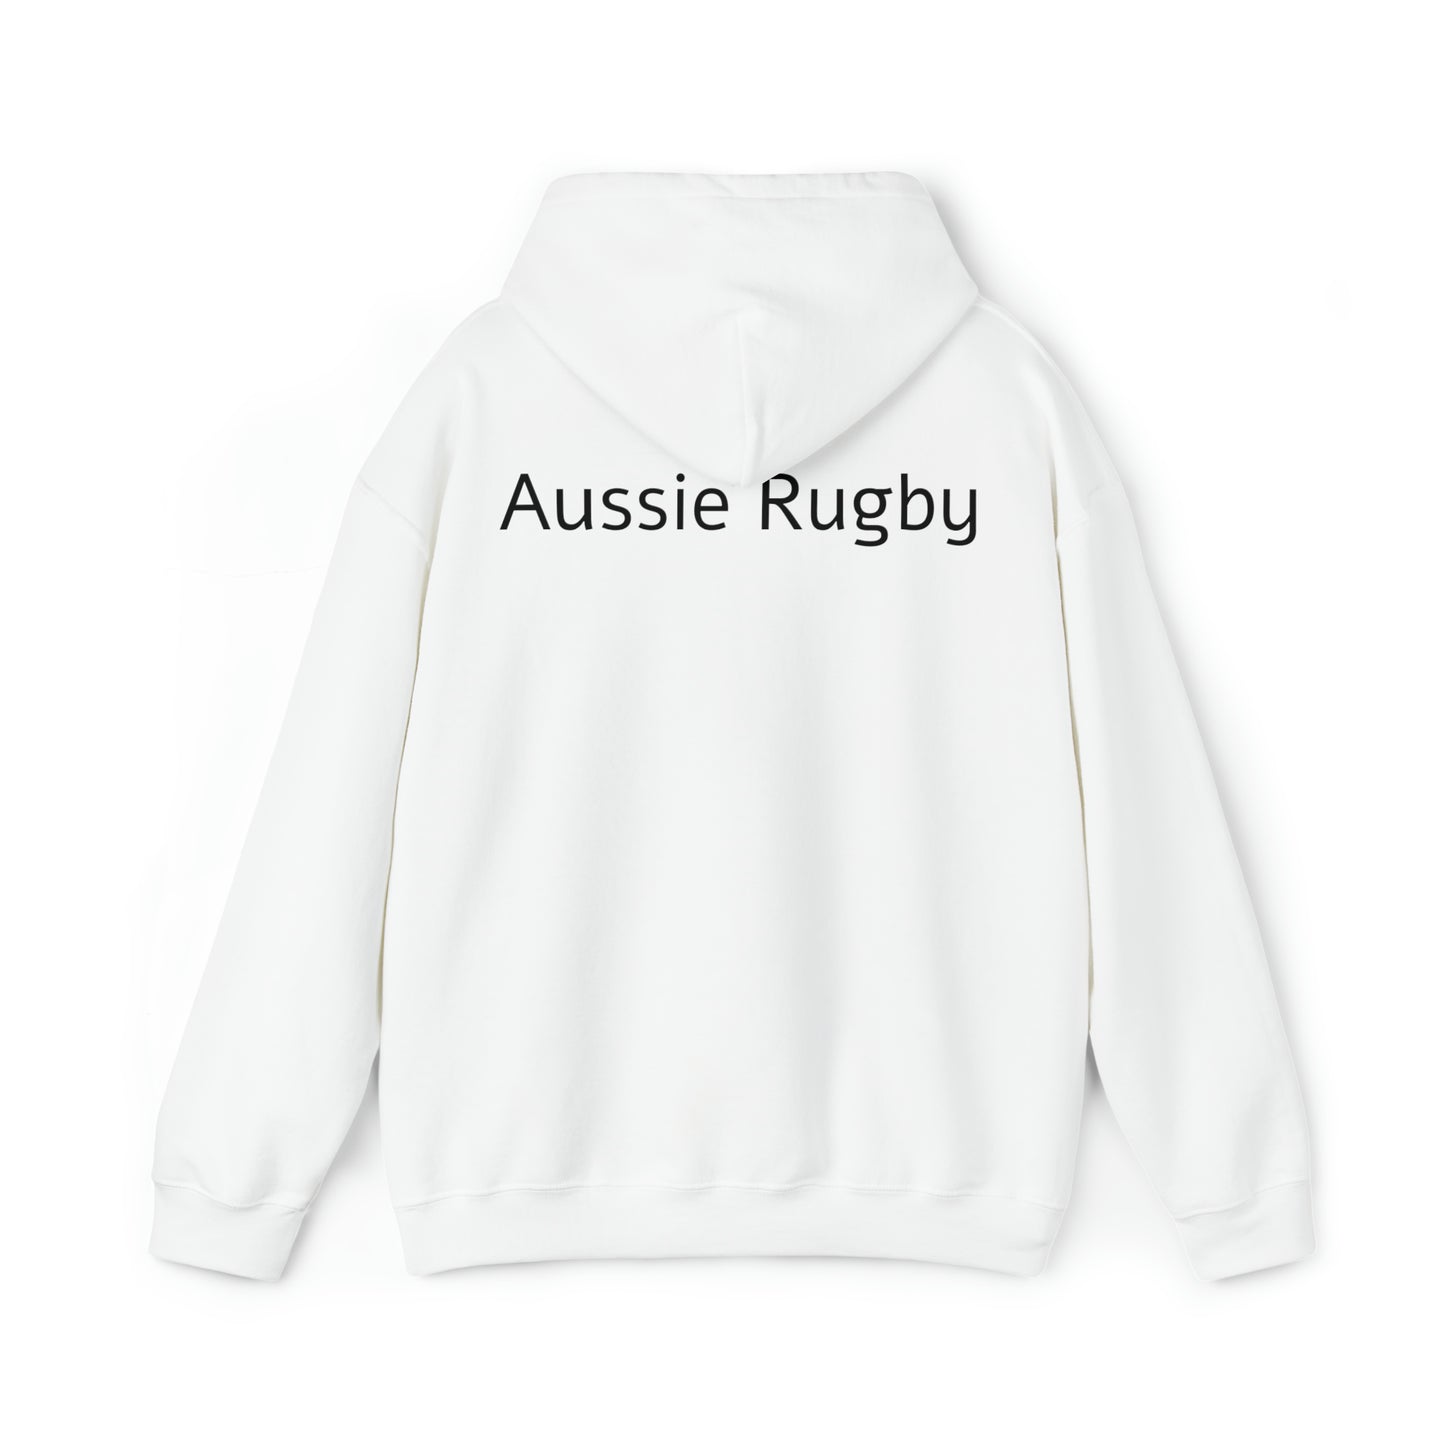 Australia lifting RWC - light hoodies